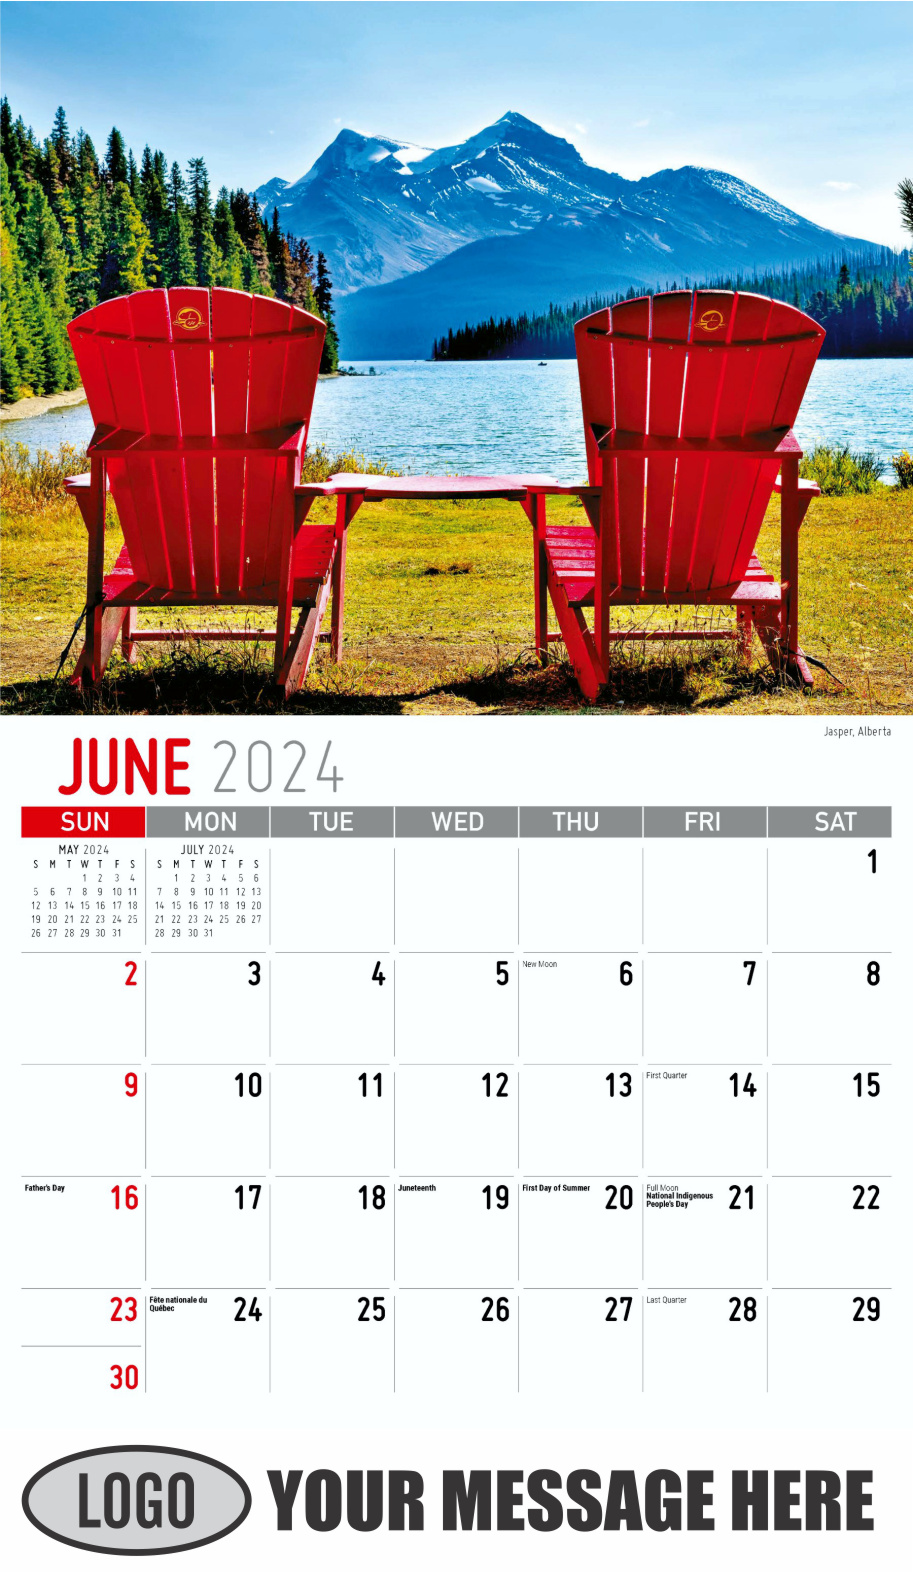 Scenes of Western Canada 2024 Business Promotional Wall Calendar - June